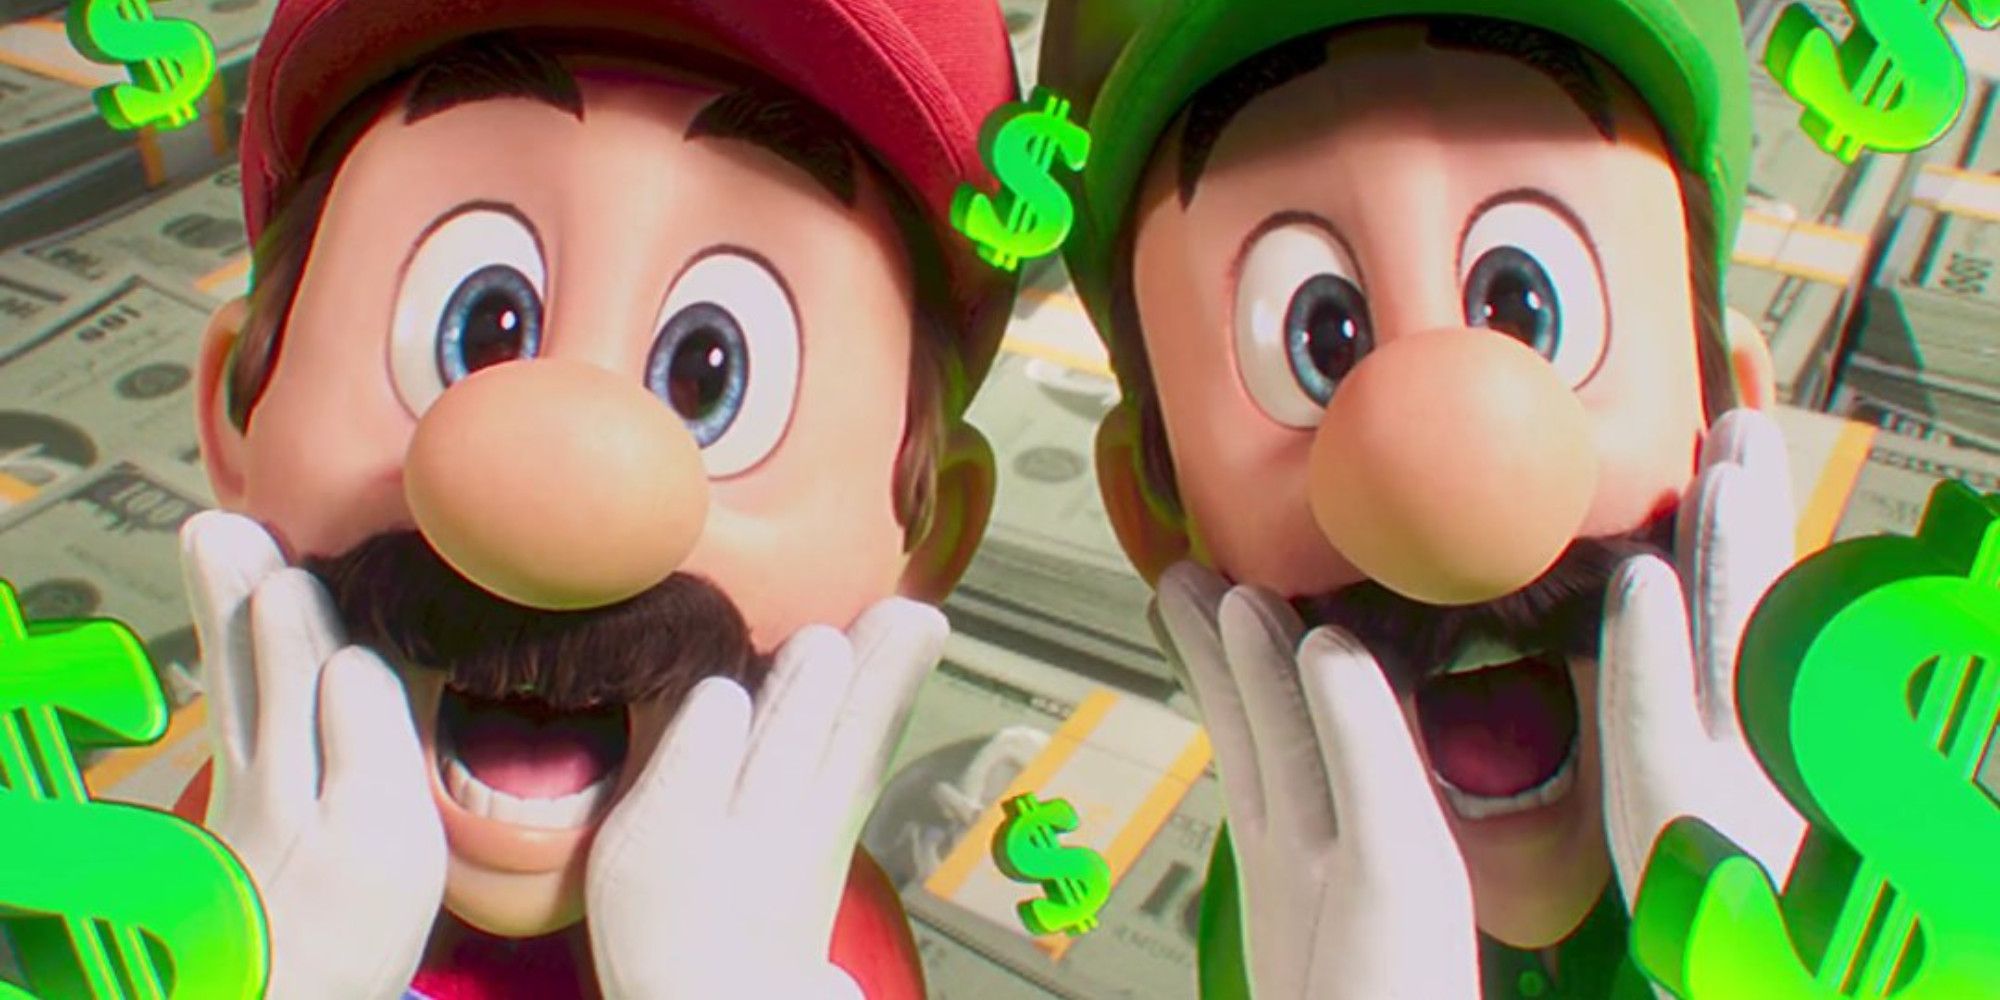 Nintendo And Illumination Are Working On Another Animated Mario Bros. Movie